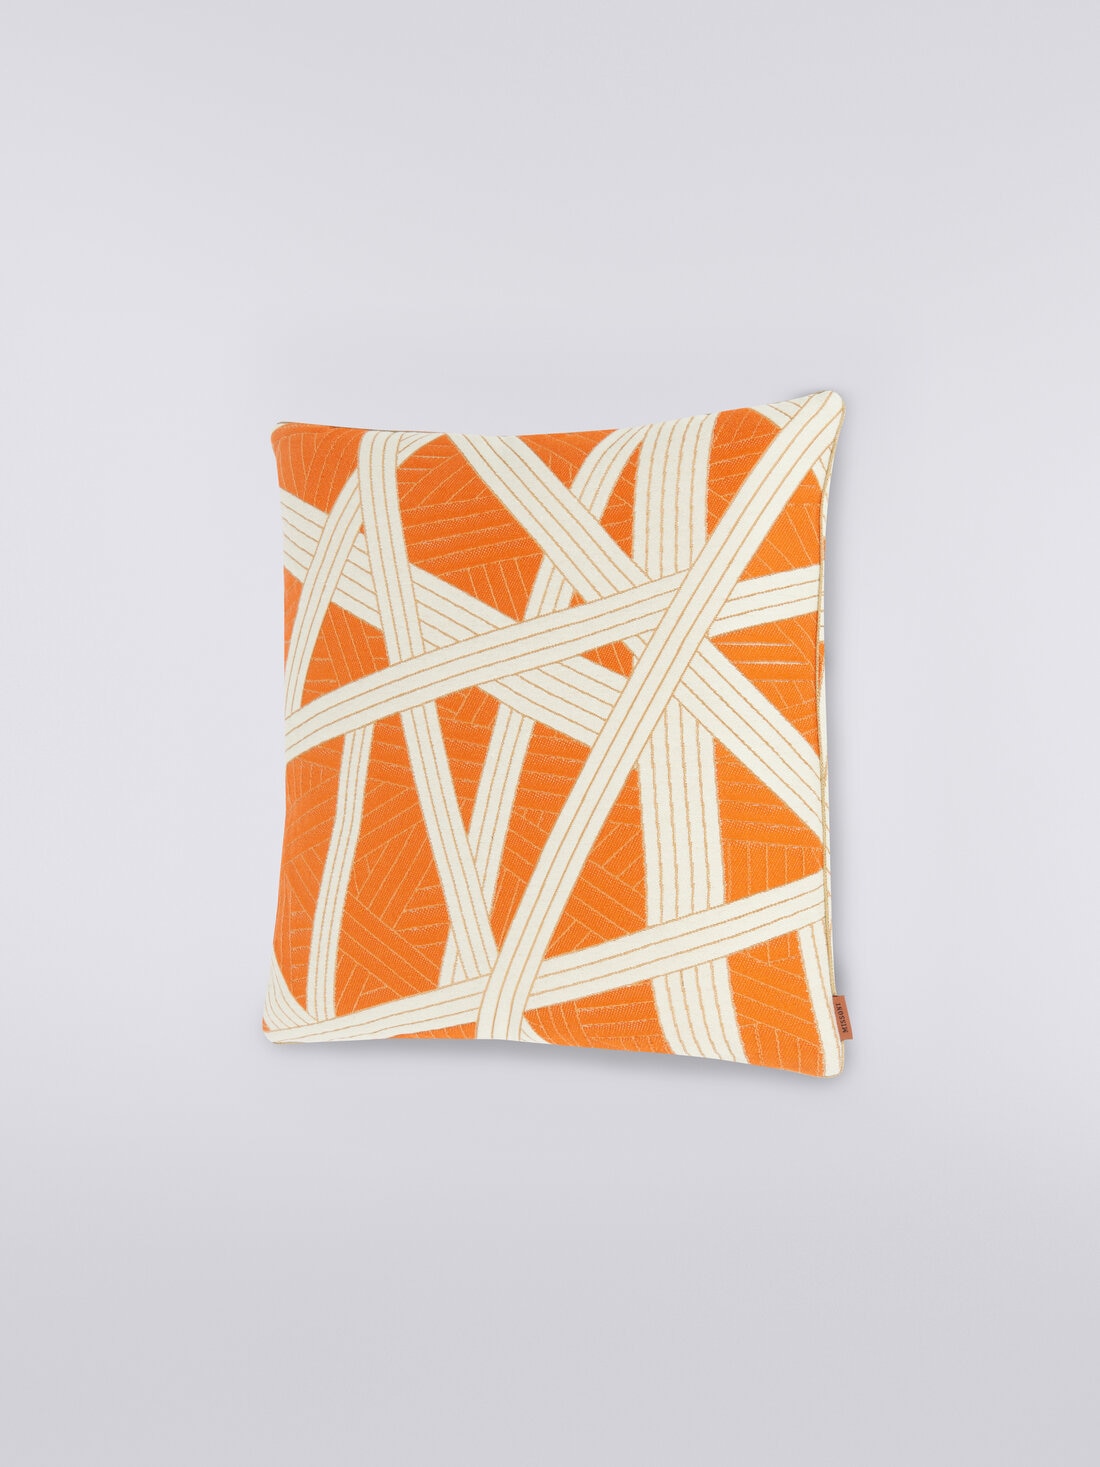 Nastri cushion 40x40 cm with stitching, Orange - 8051575830525 - 1